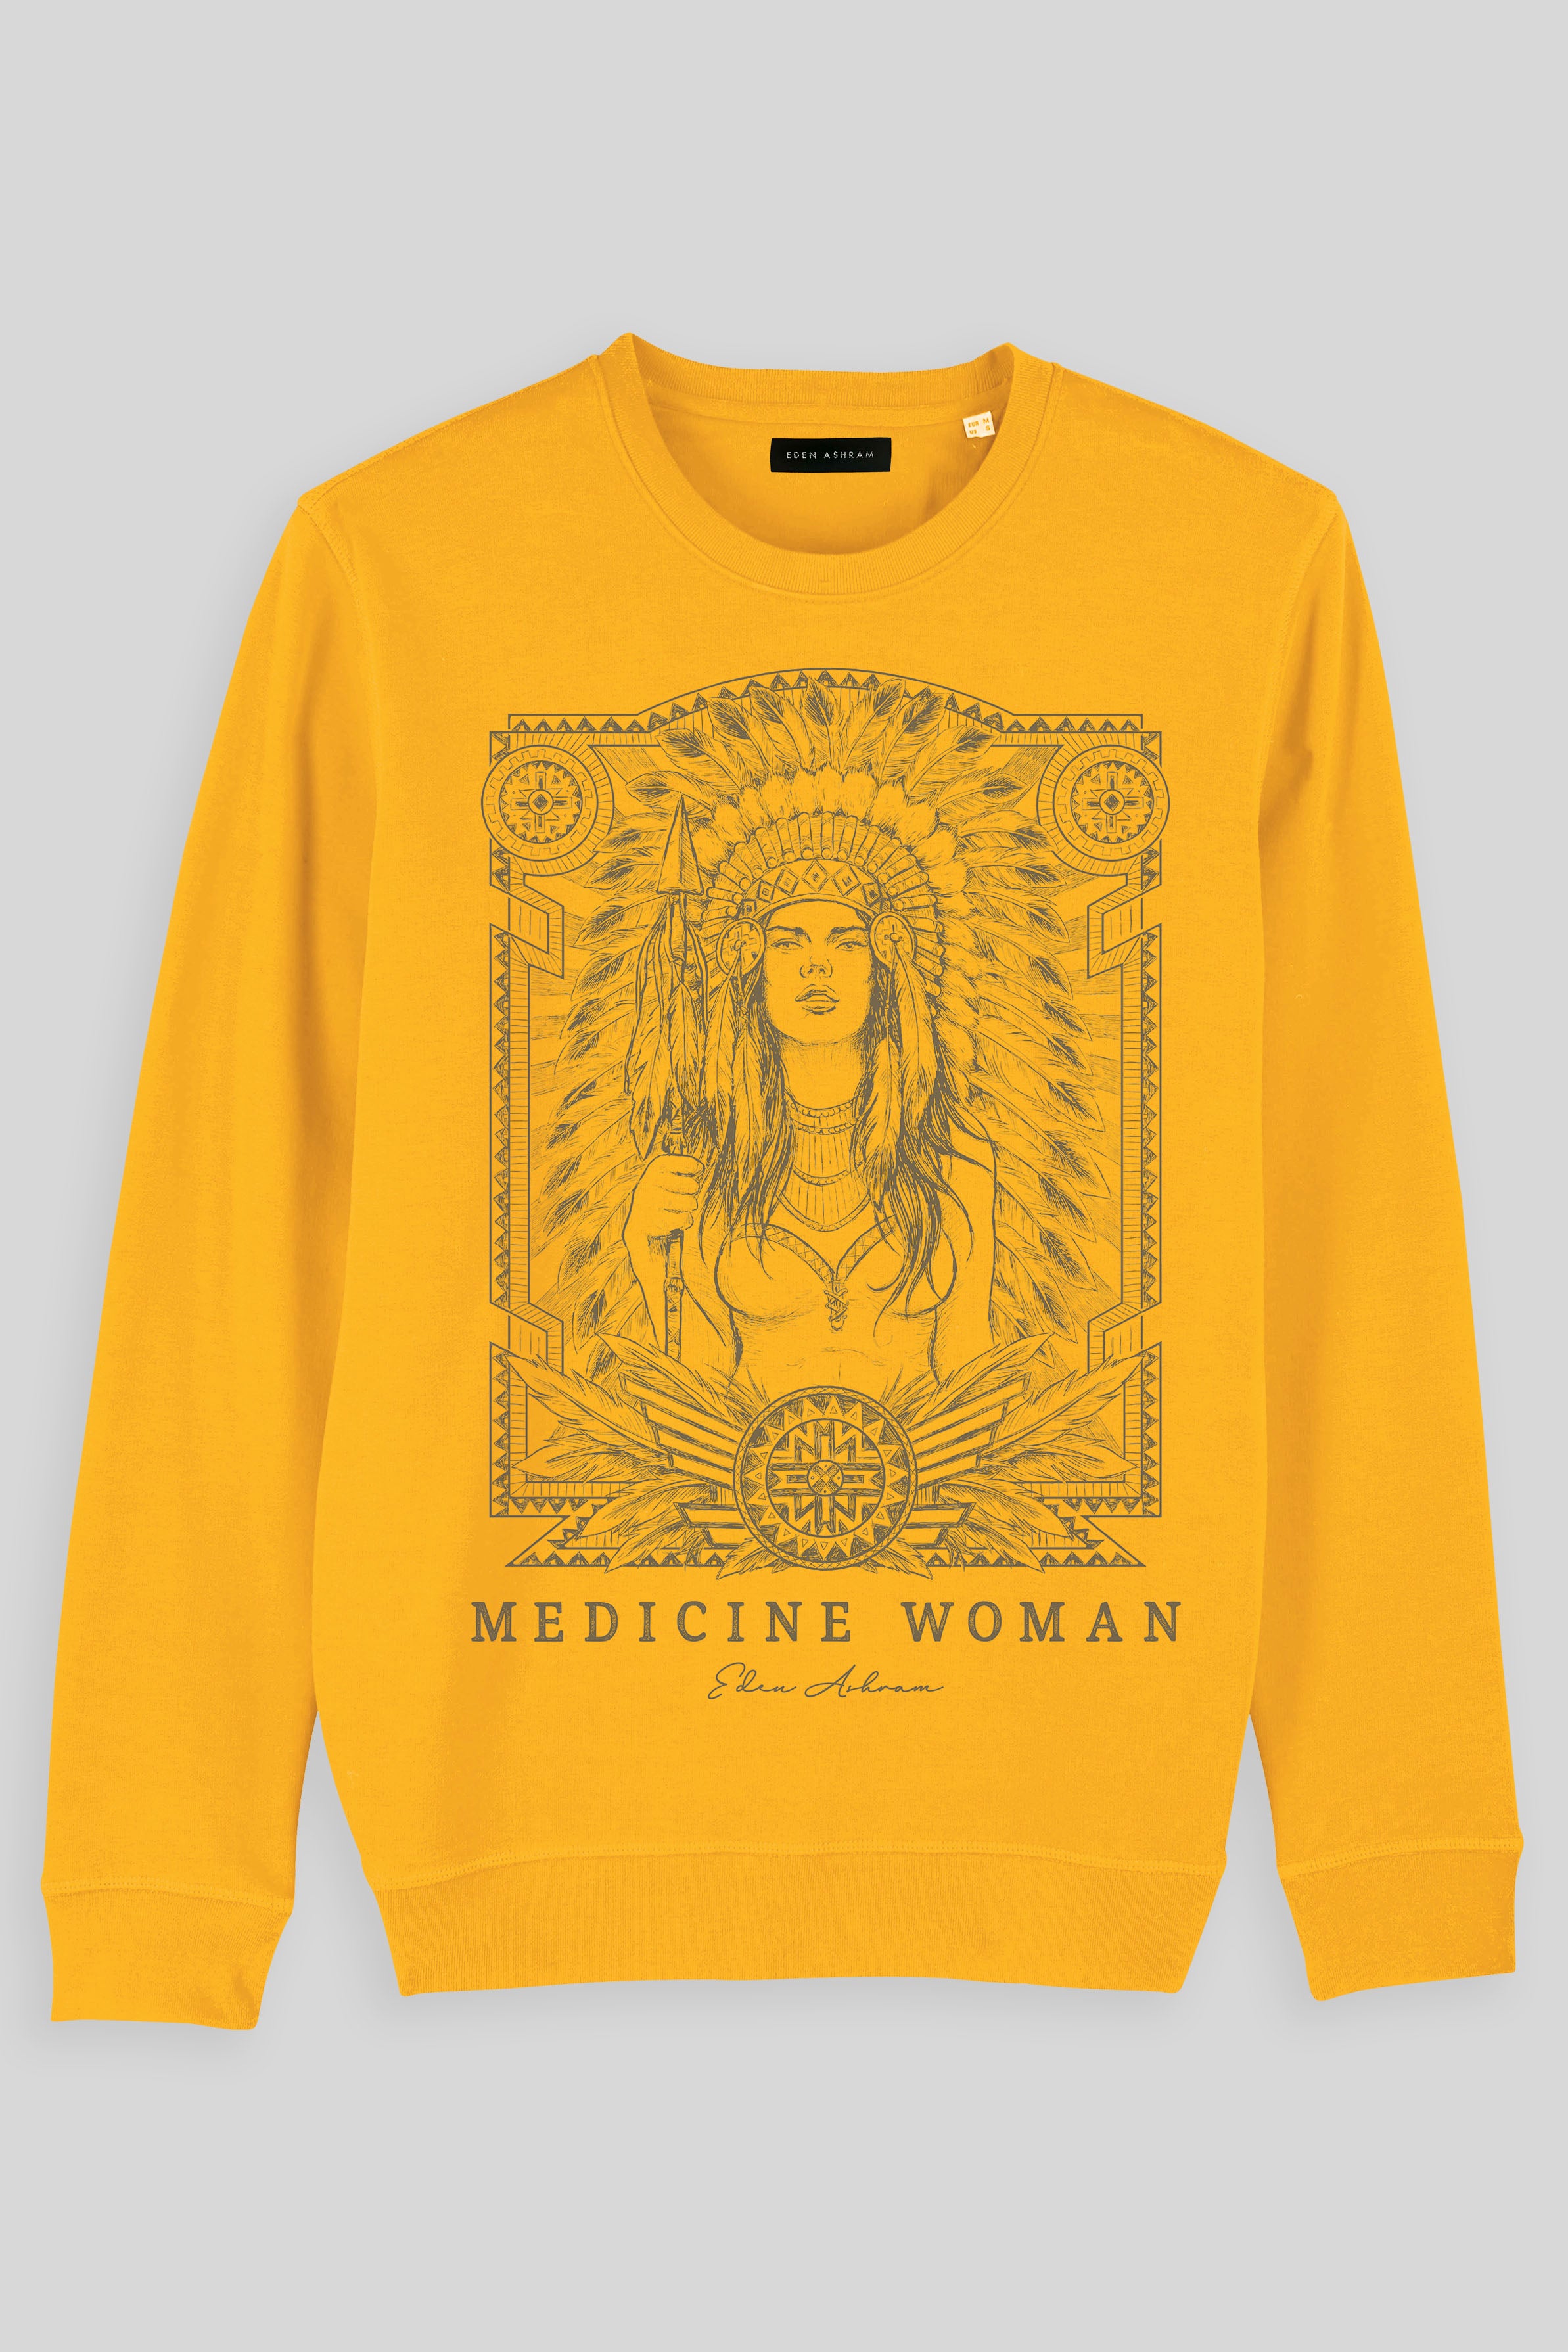 EDEN ASHRAM Medicine Woman Premium Crew Neck Sweatshirt Spectra Yellow